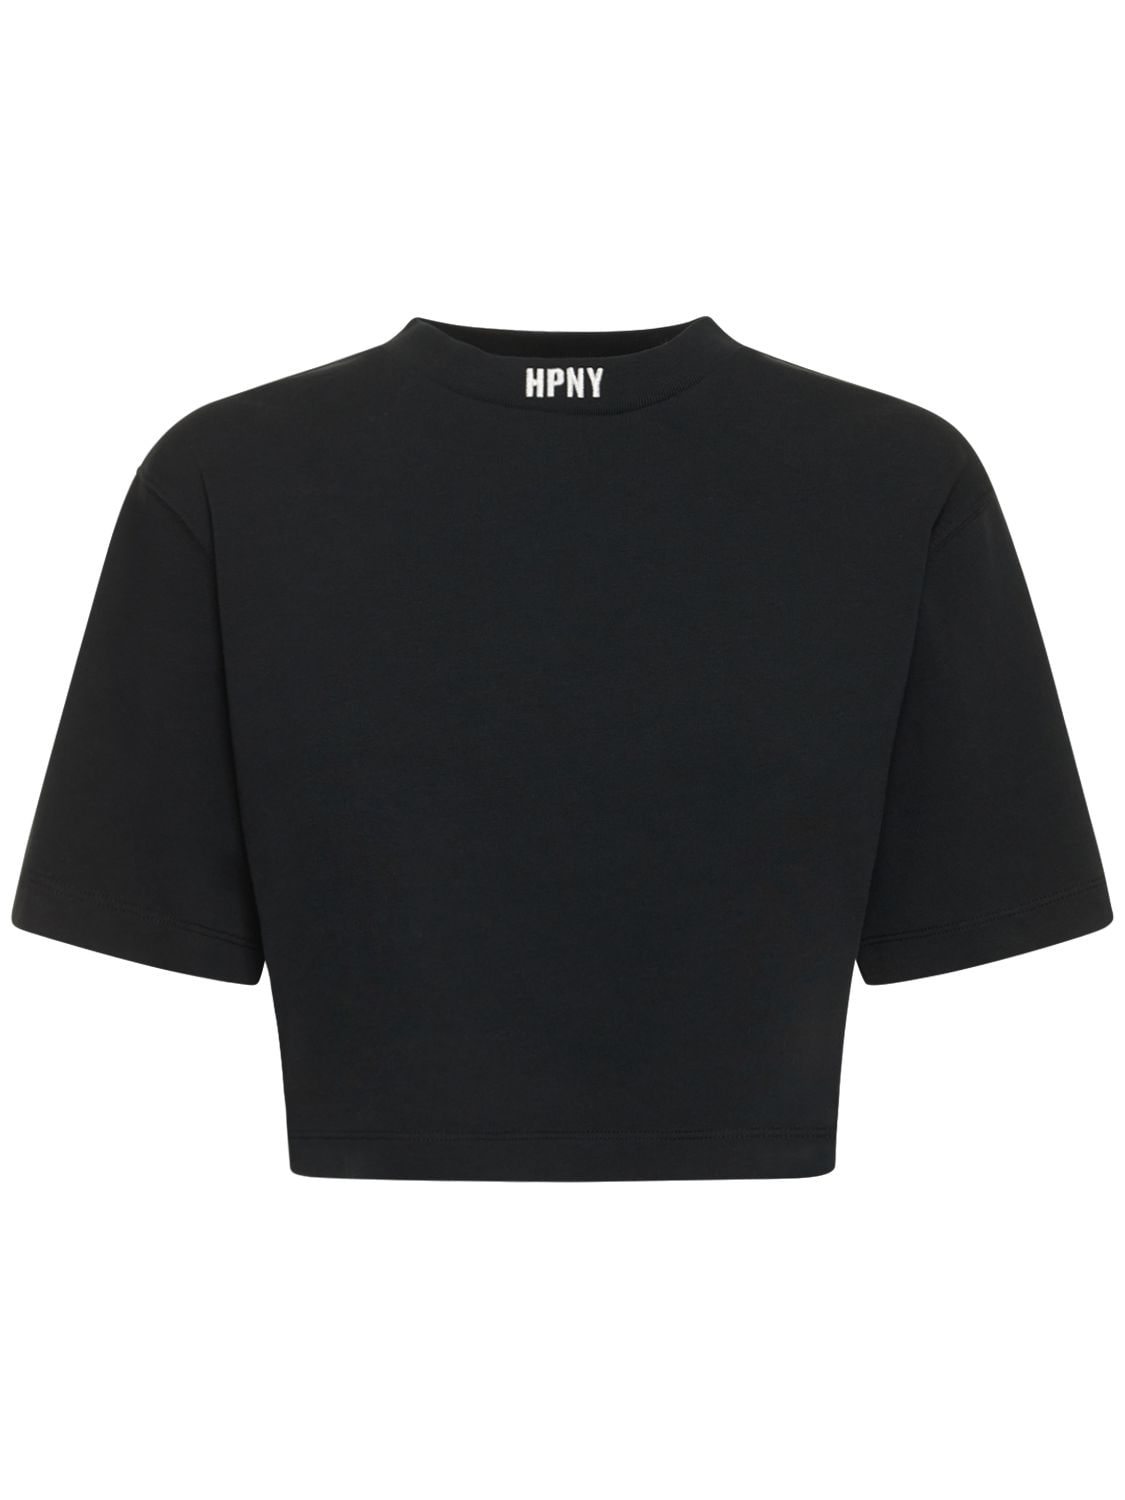 Hpny Cropped Cotton Jersey T-shirt